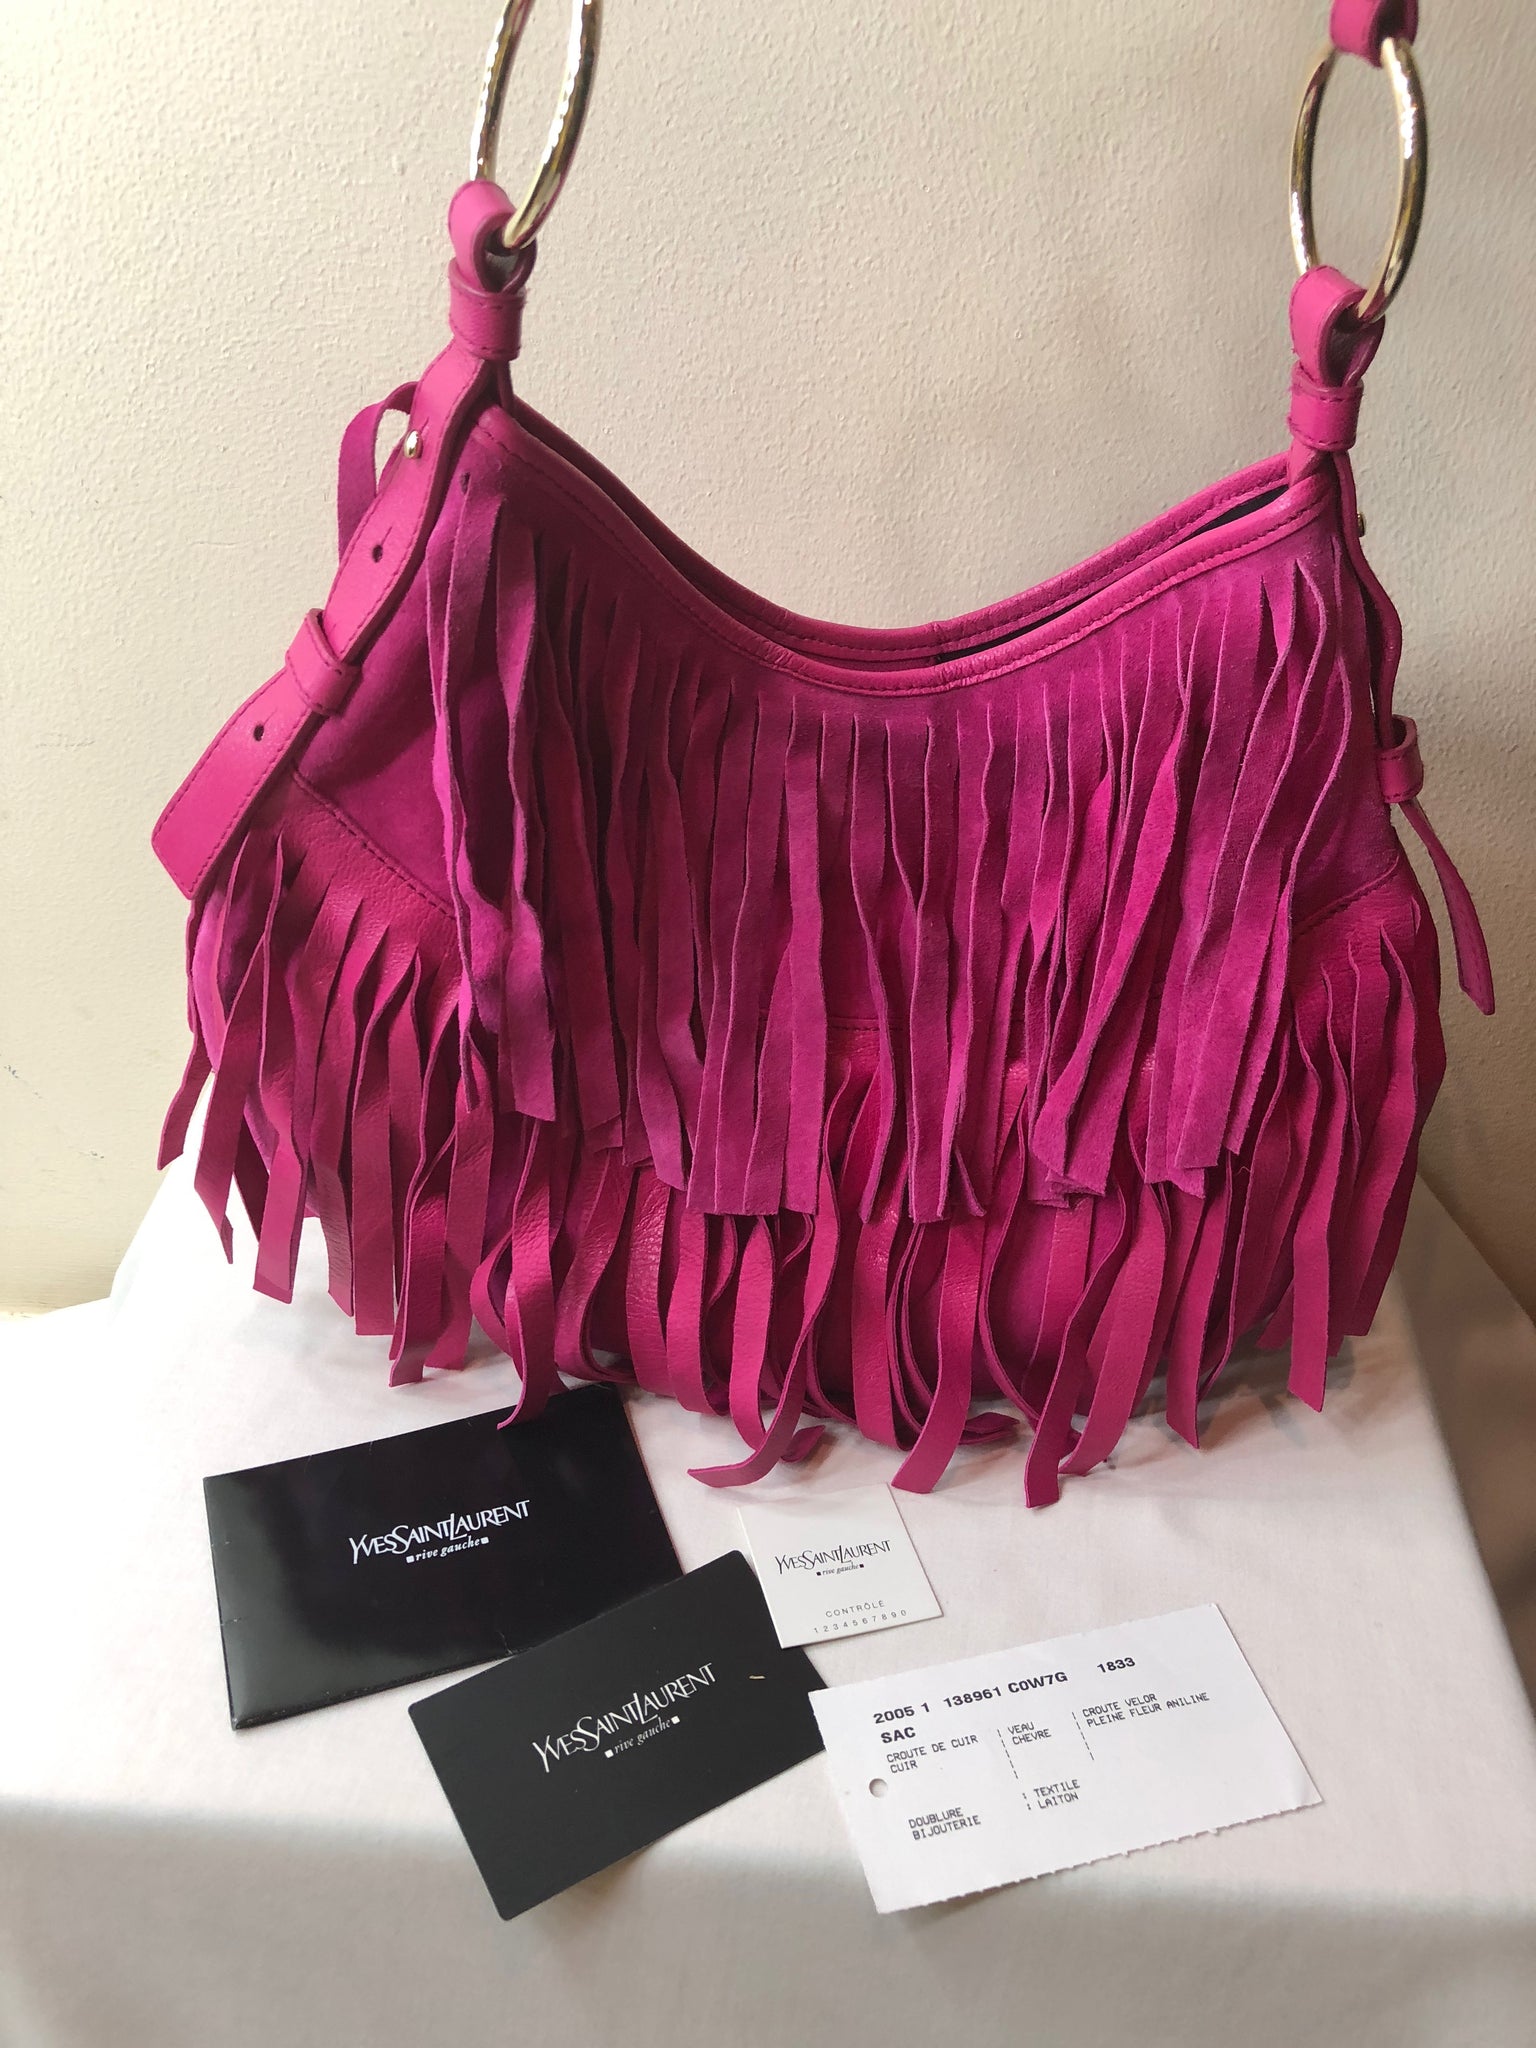 Yves Saint Laurent Hot Pink Leather and Suede Boheme Fringe Bag